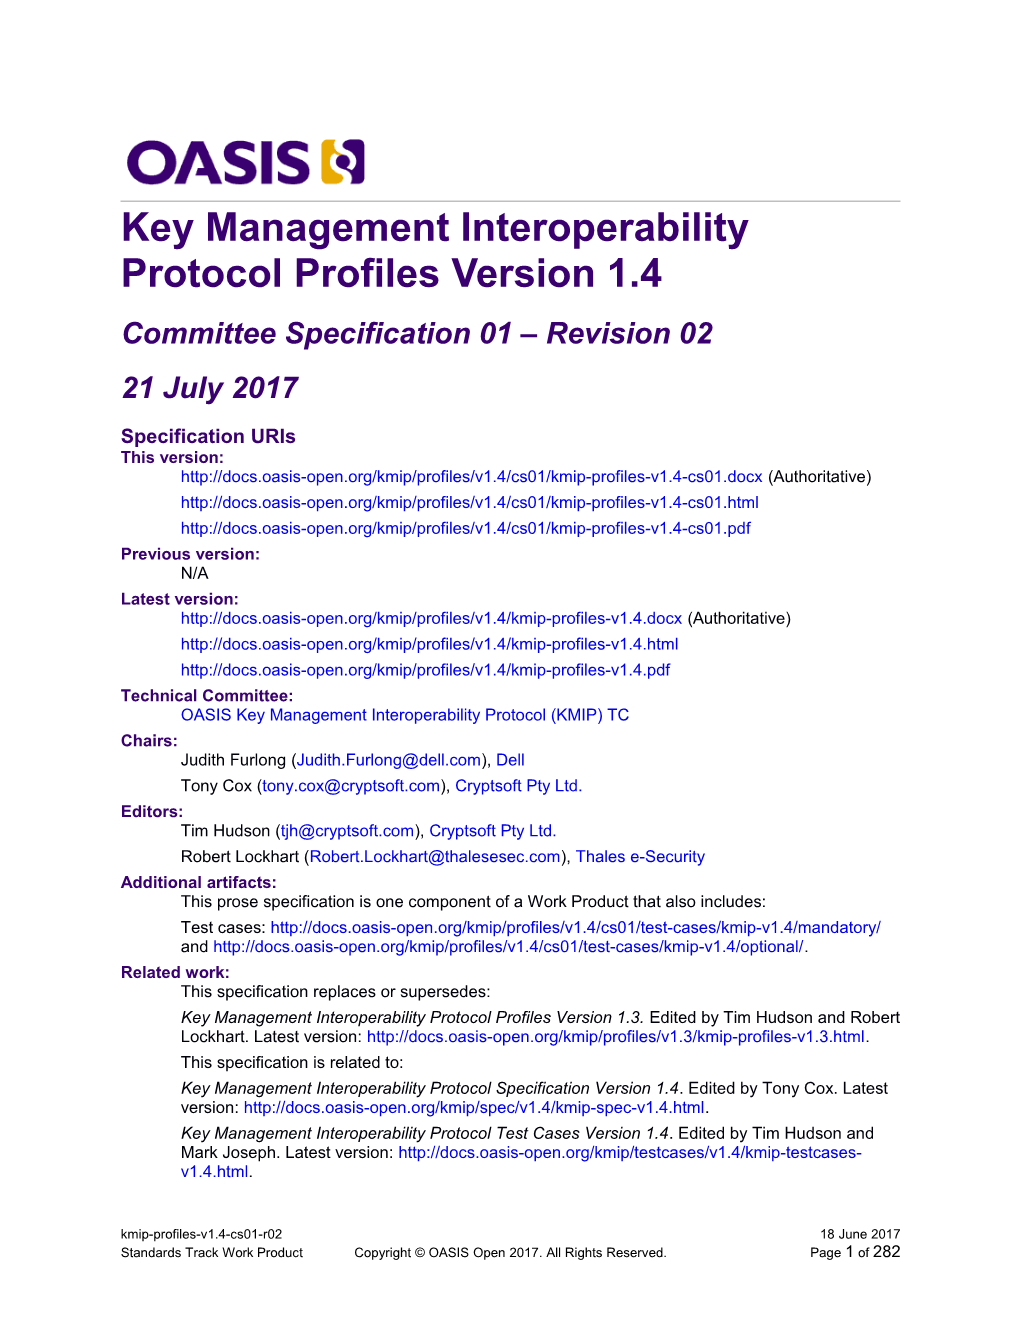 Key Management Interoperability Protocol Profiles Version 1.4